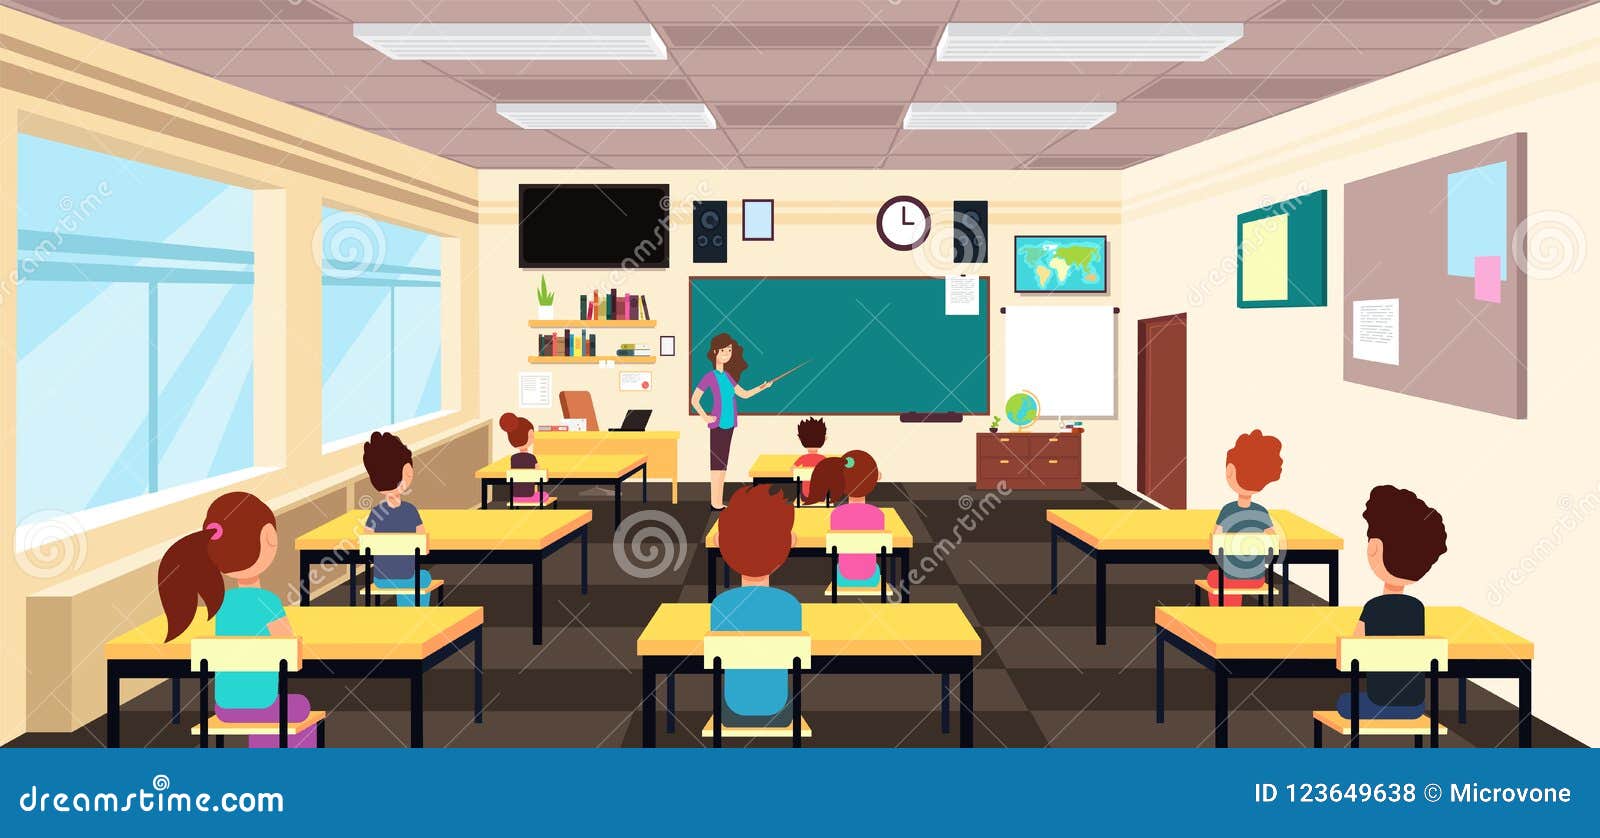 Teacher at Blackboard and Children at School Desks in Classroom